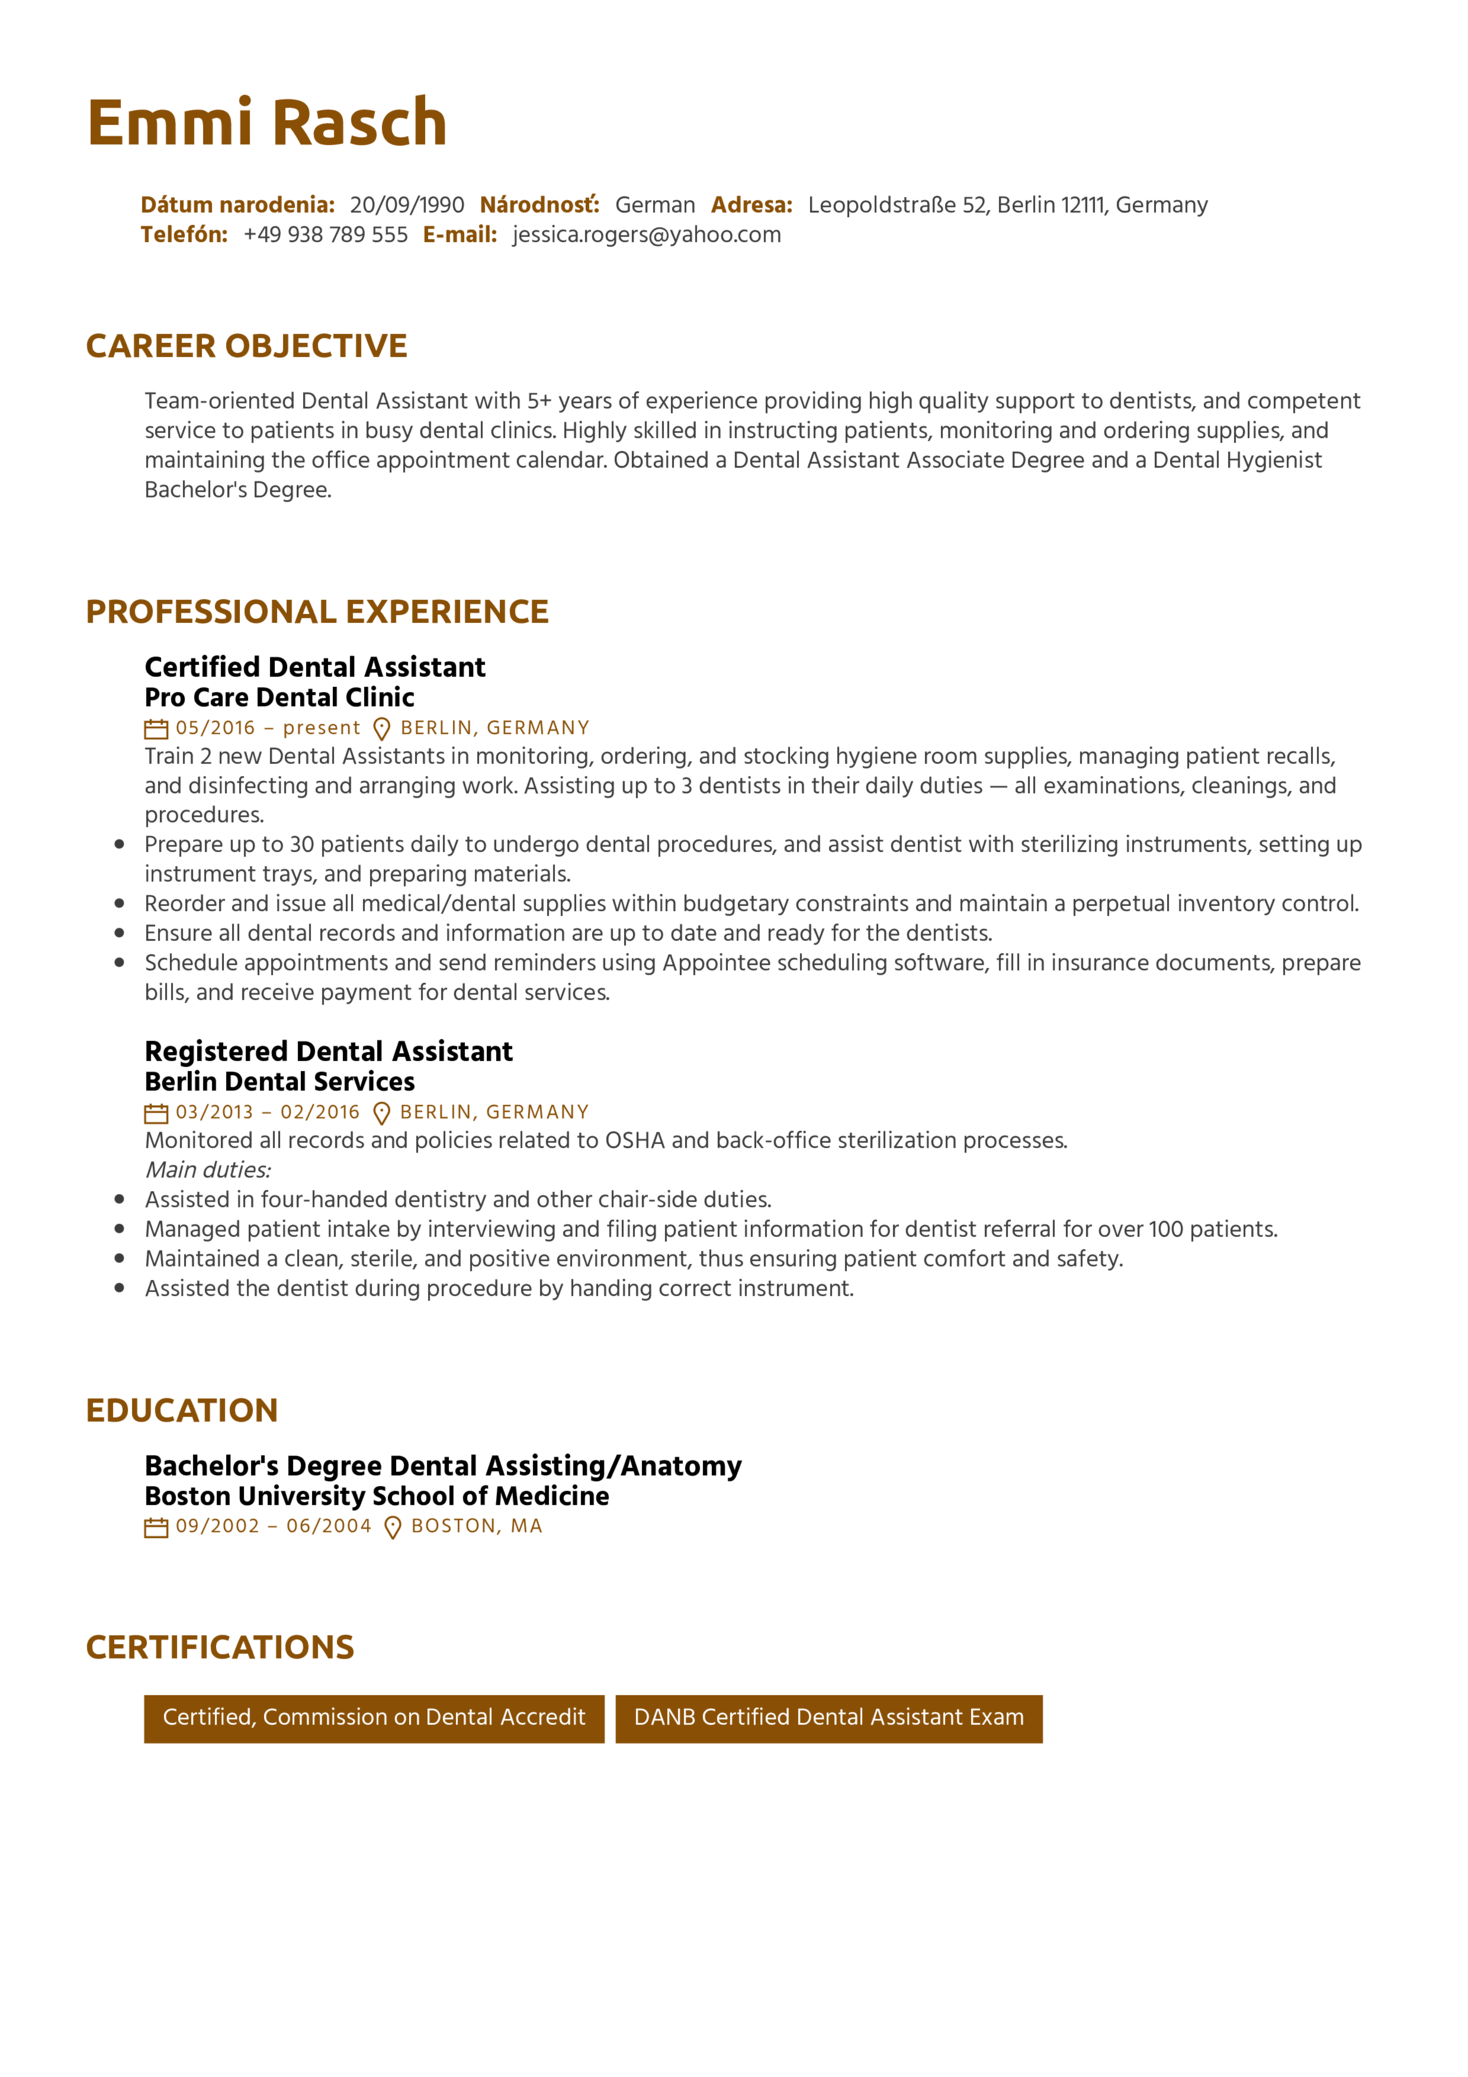 best resume writing service